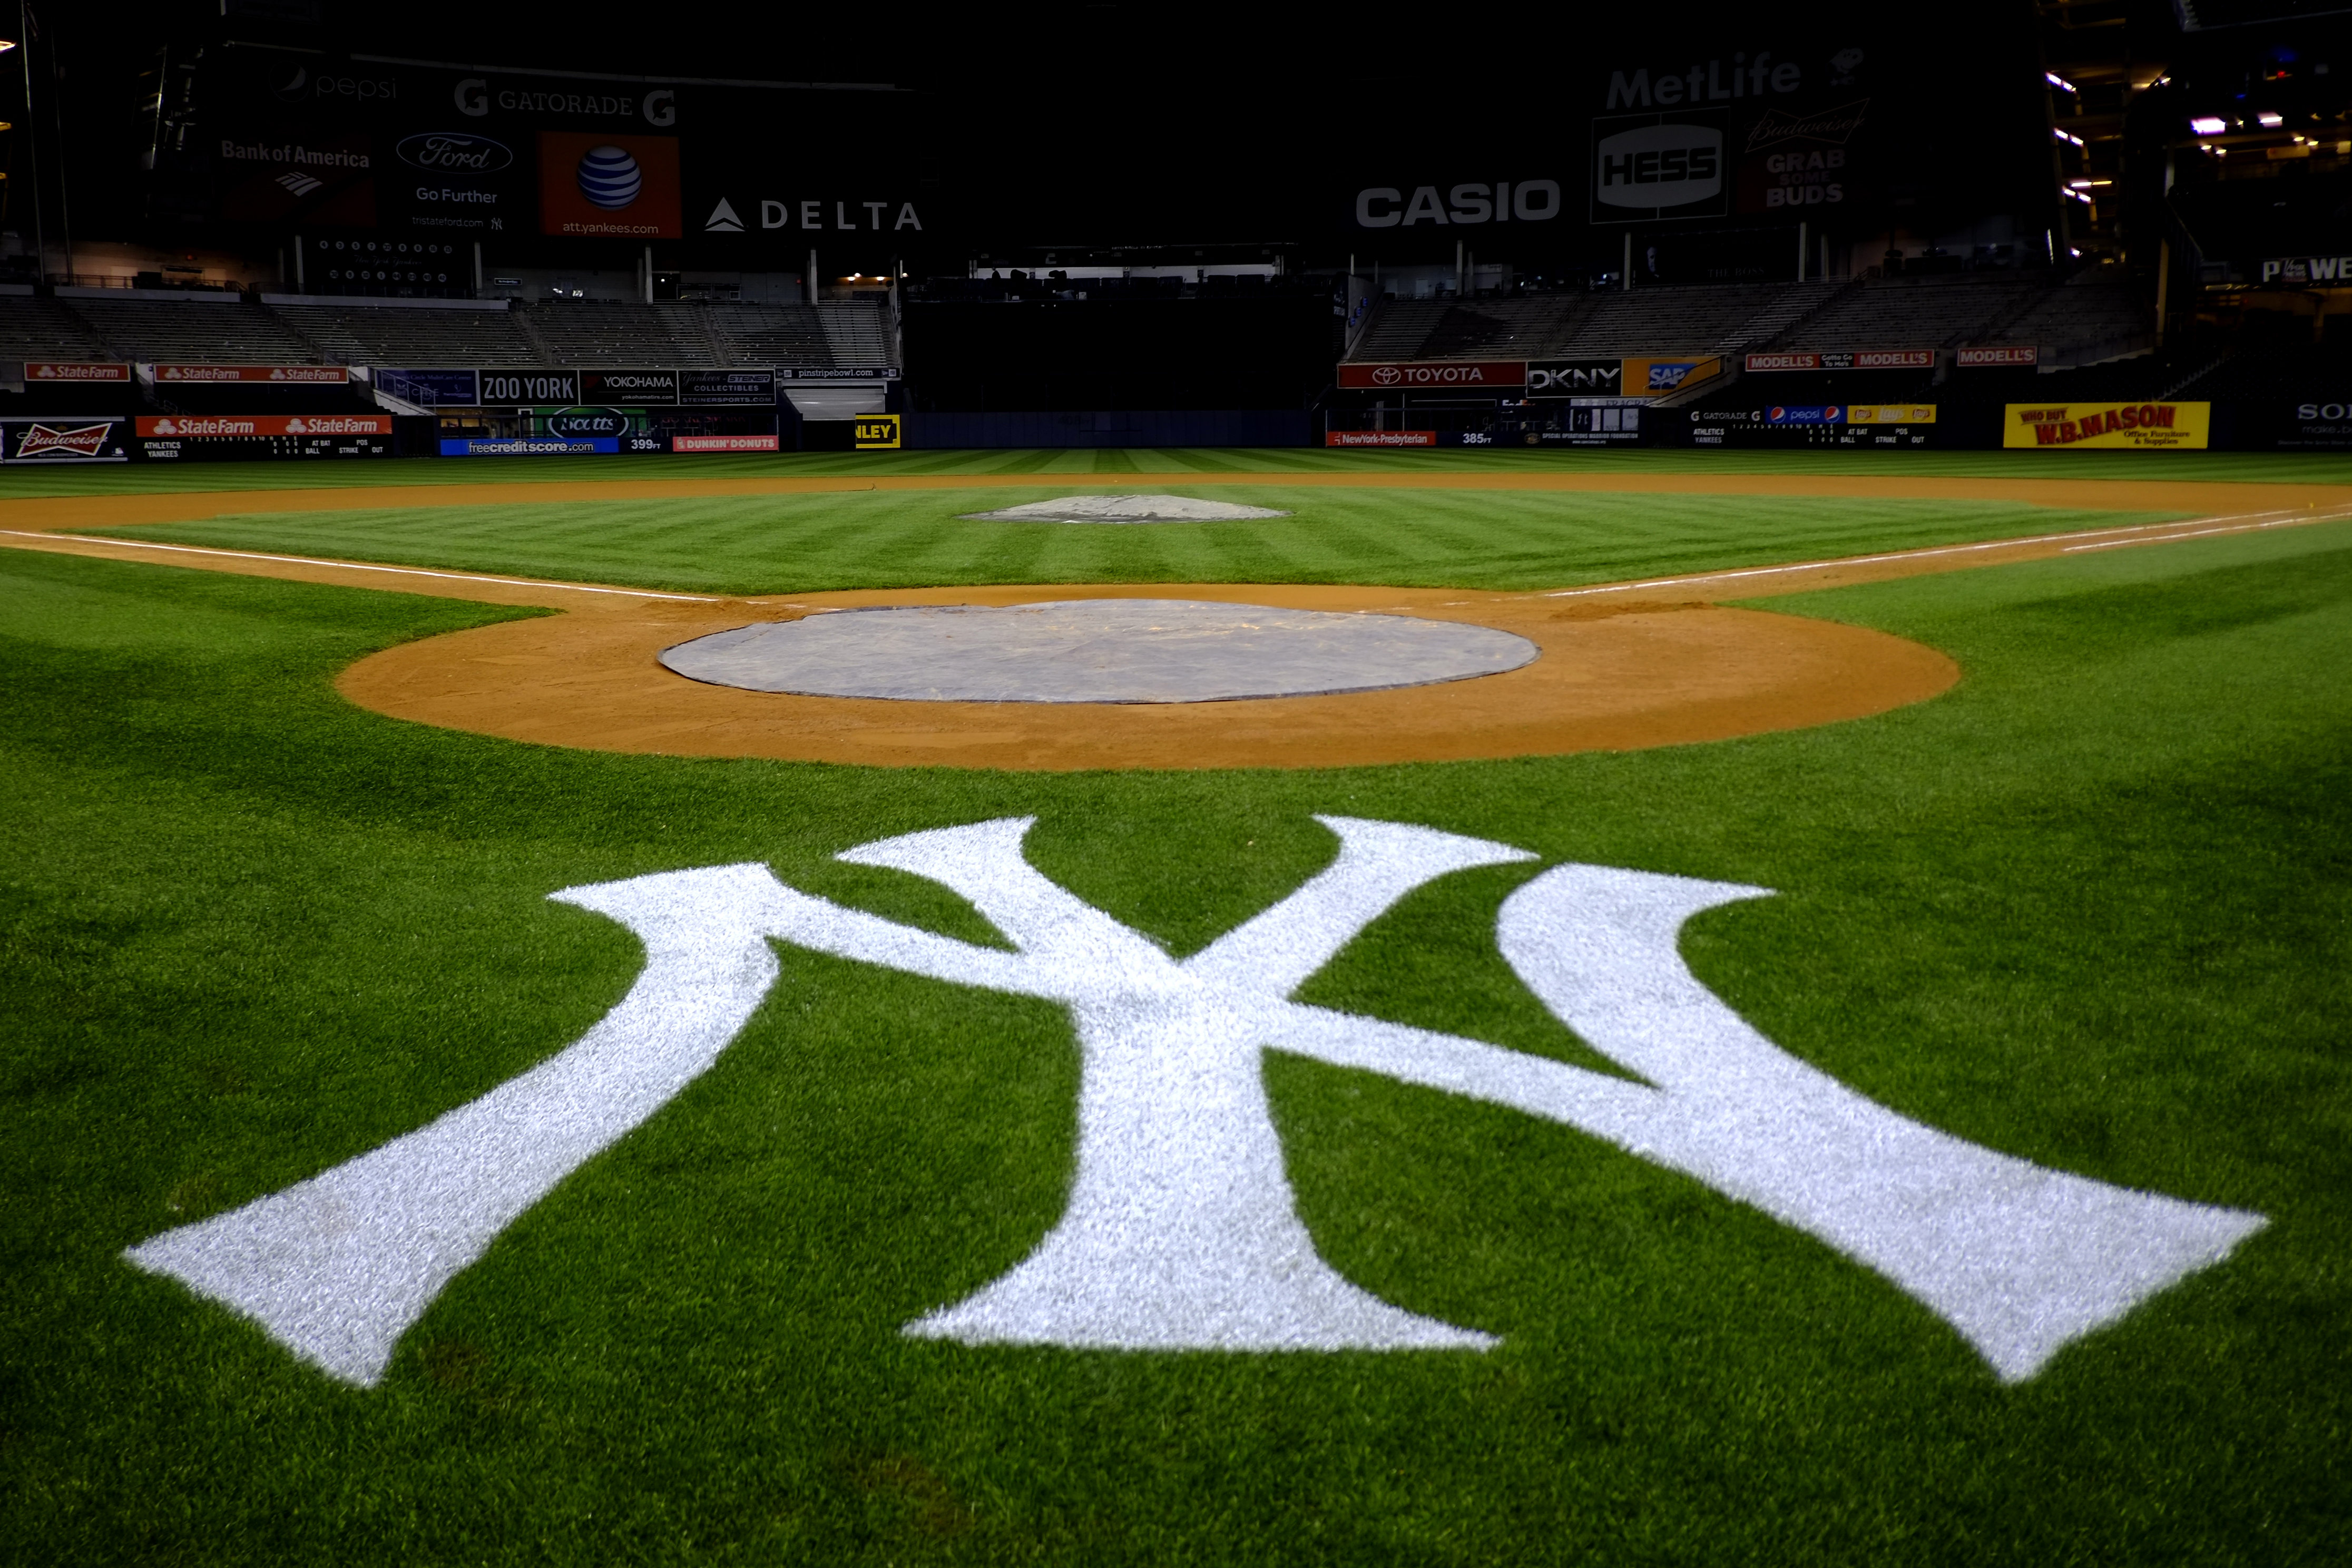 Yankee Stadium (New York) – Society for American Baseball Research